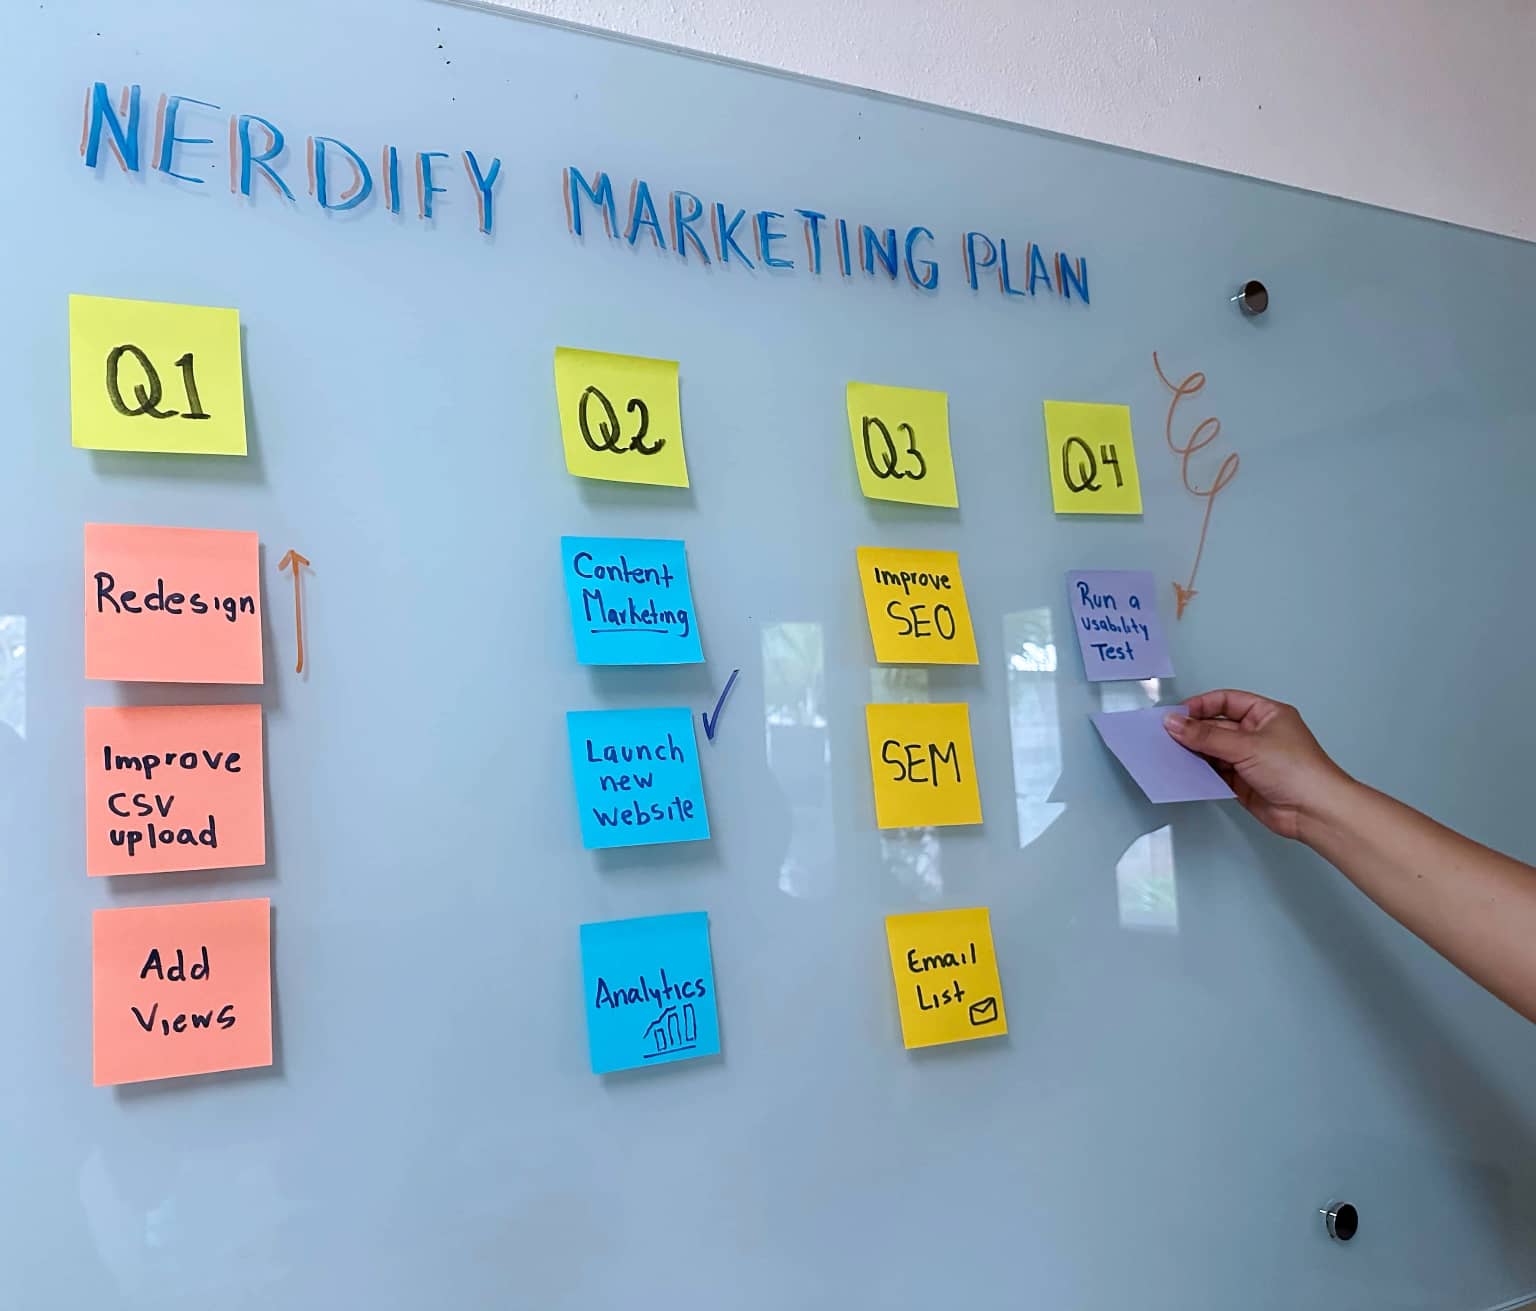 Marketers at Nerdify devising a new digital marketing strategy